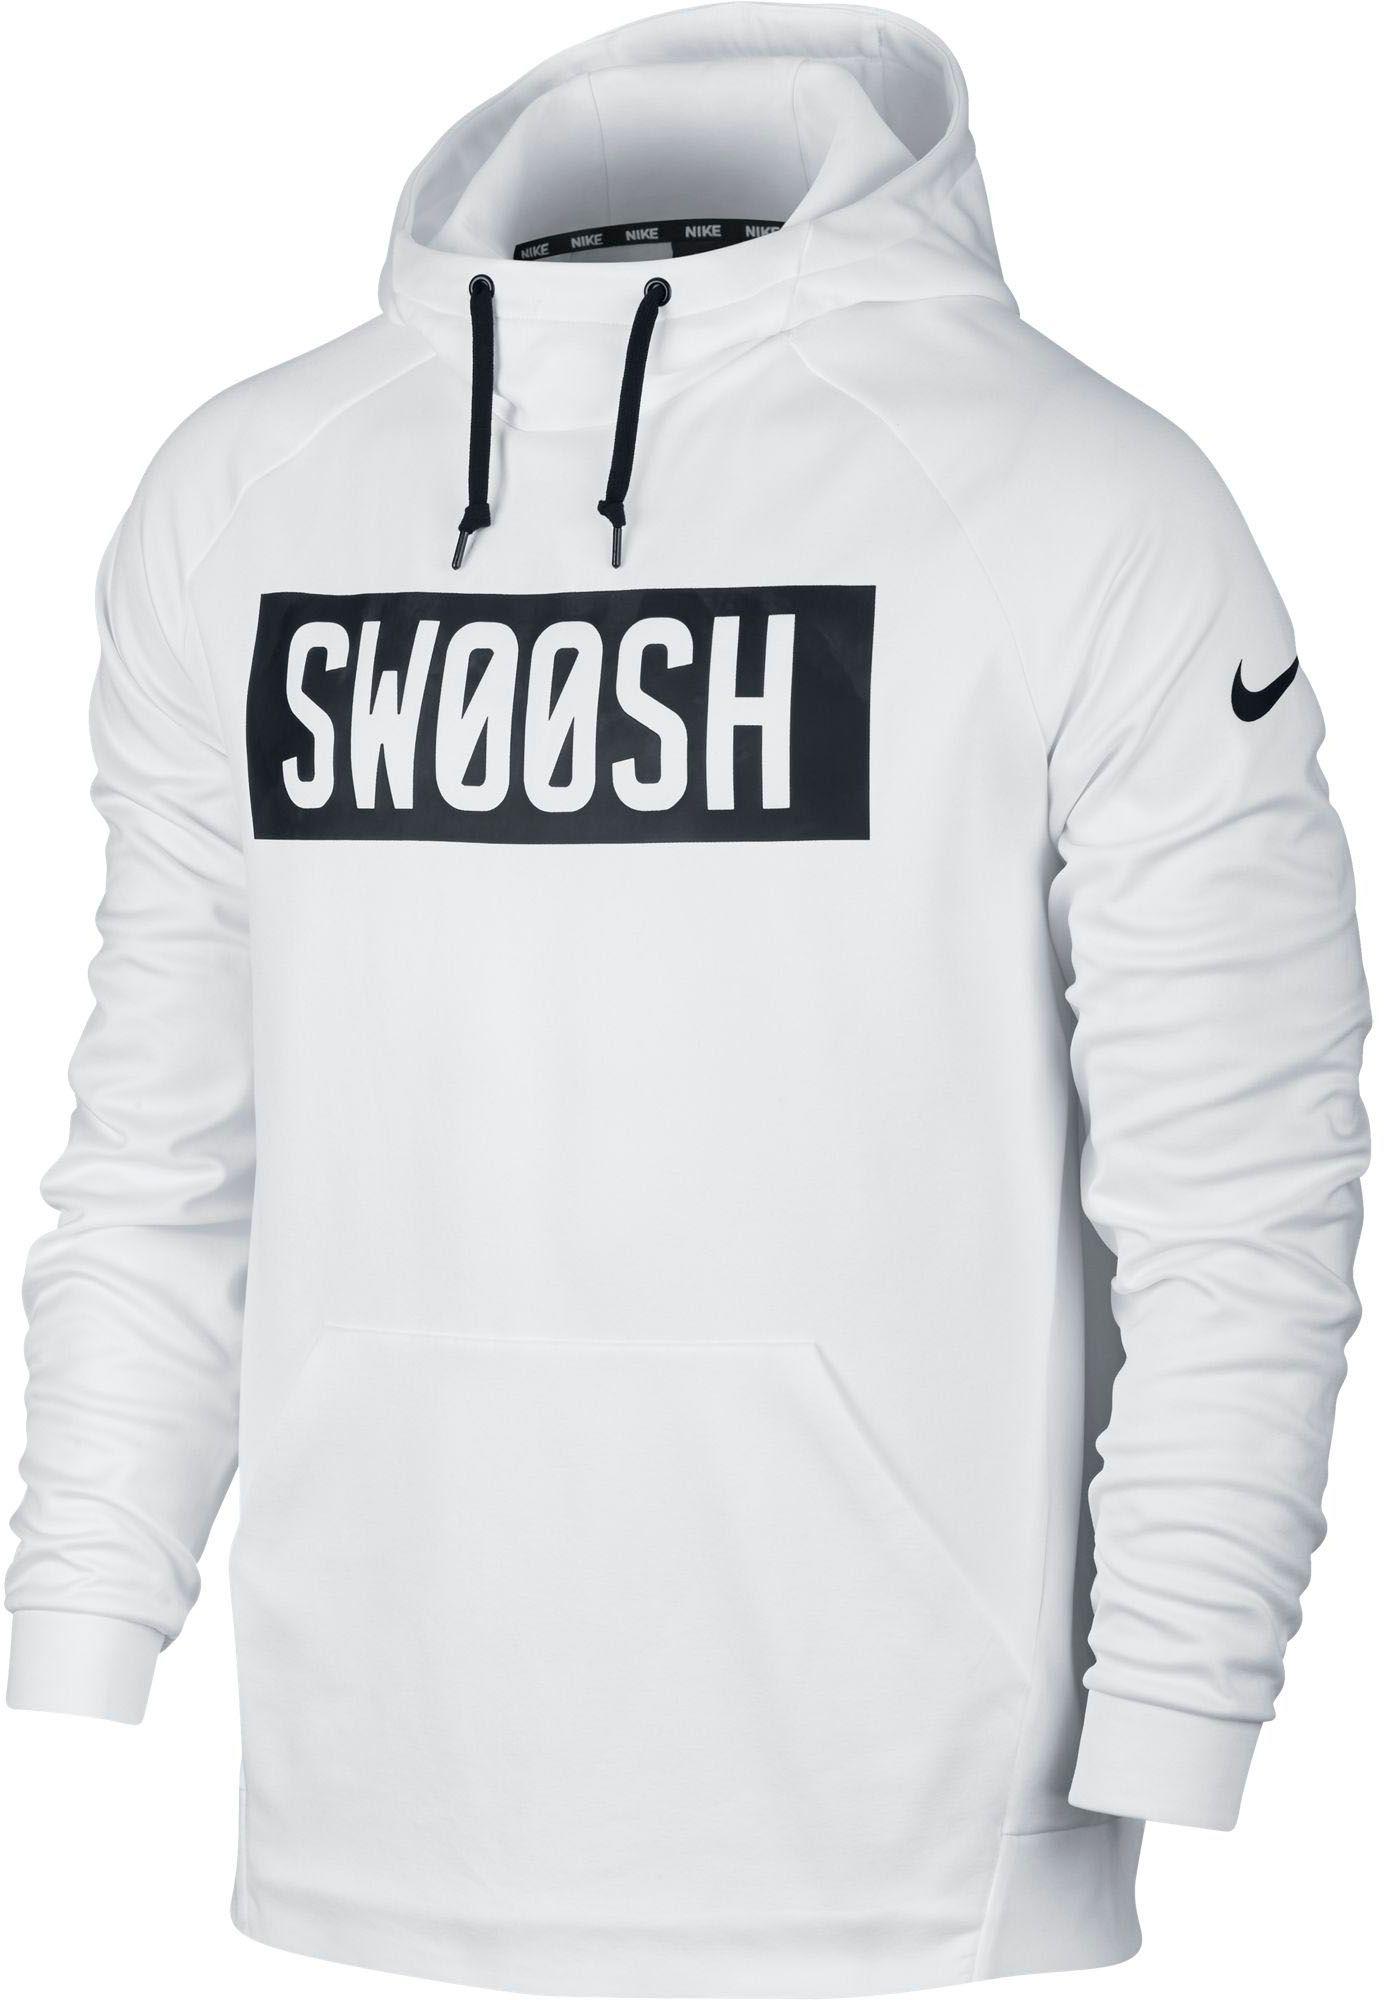 swoosh hoodies